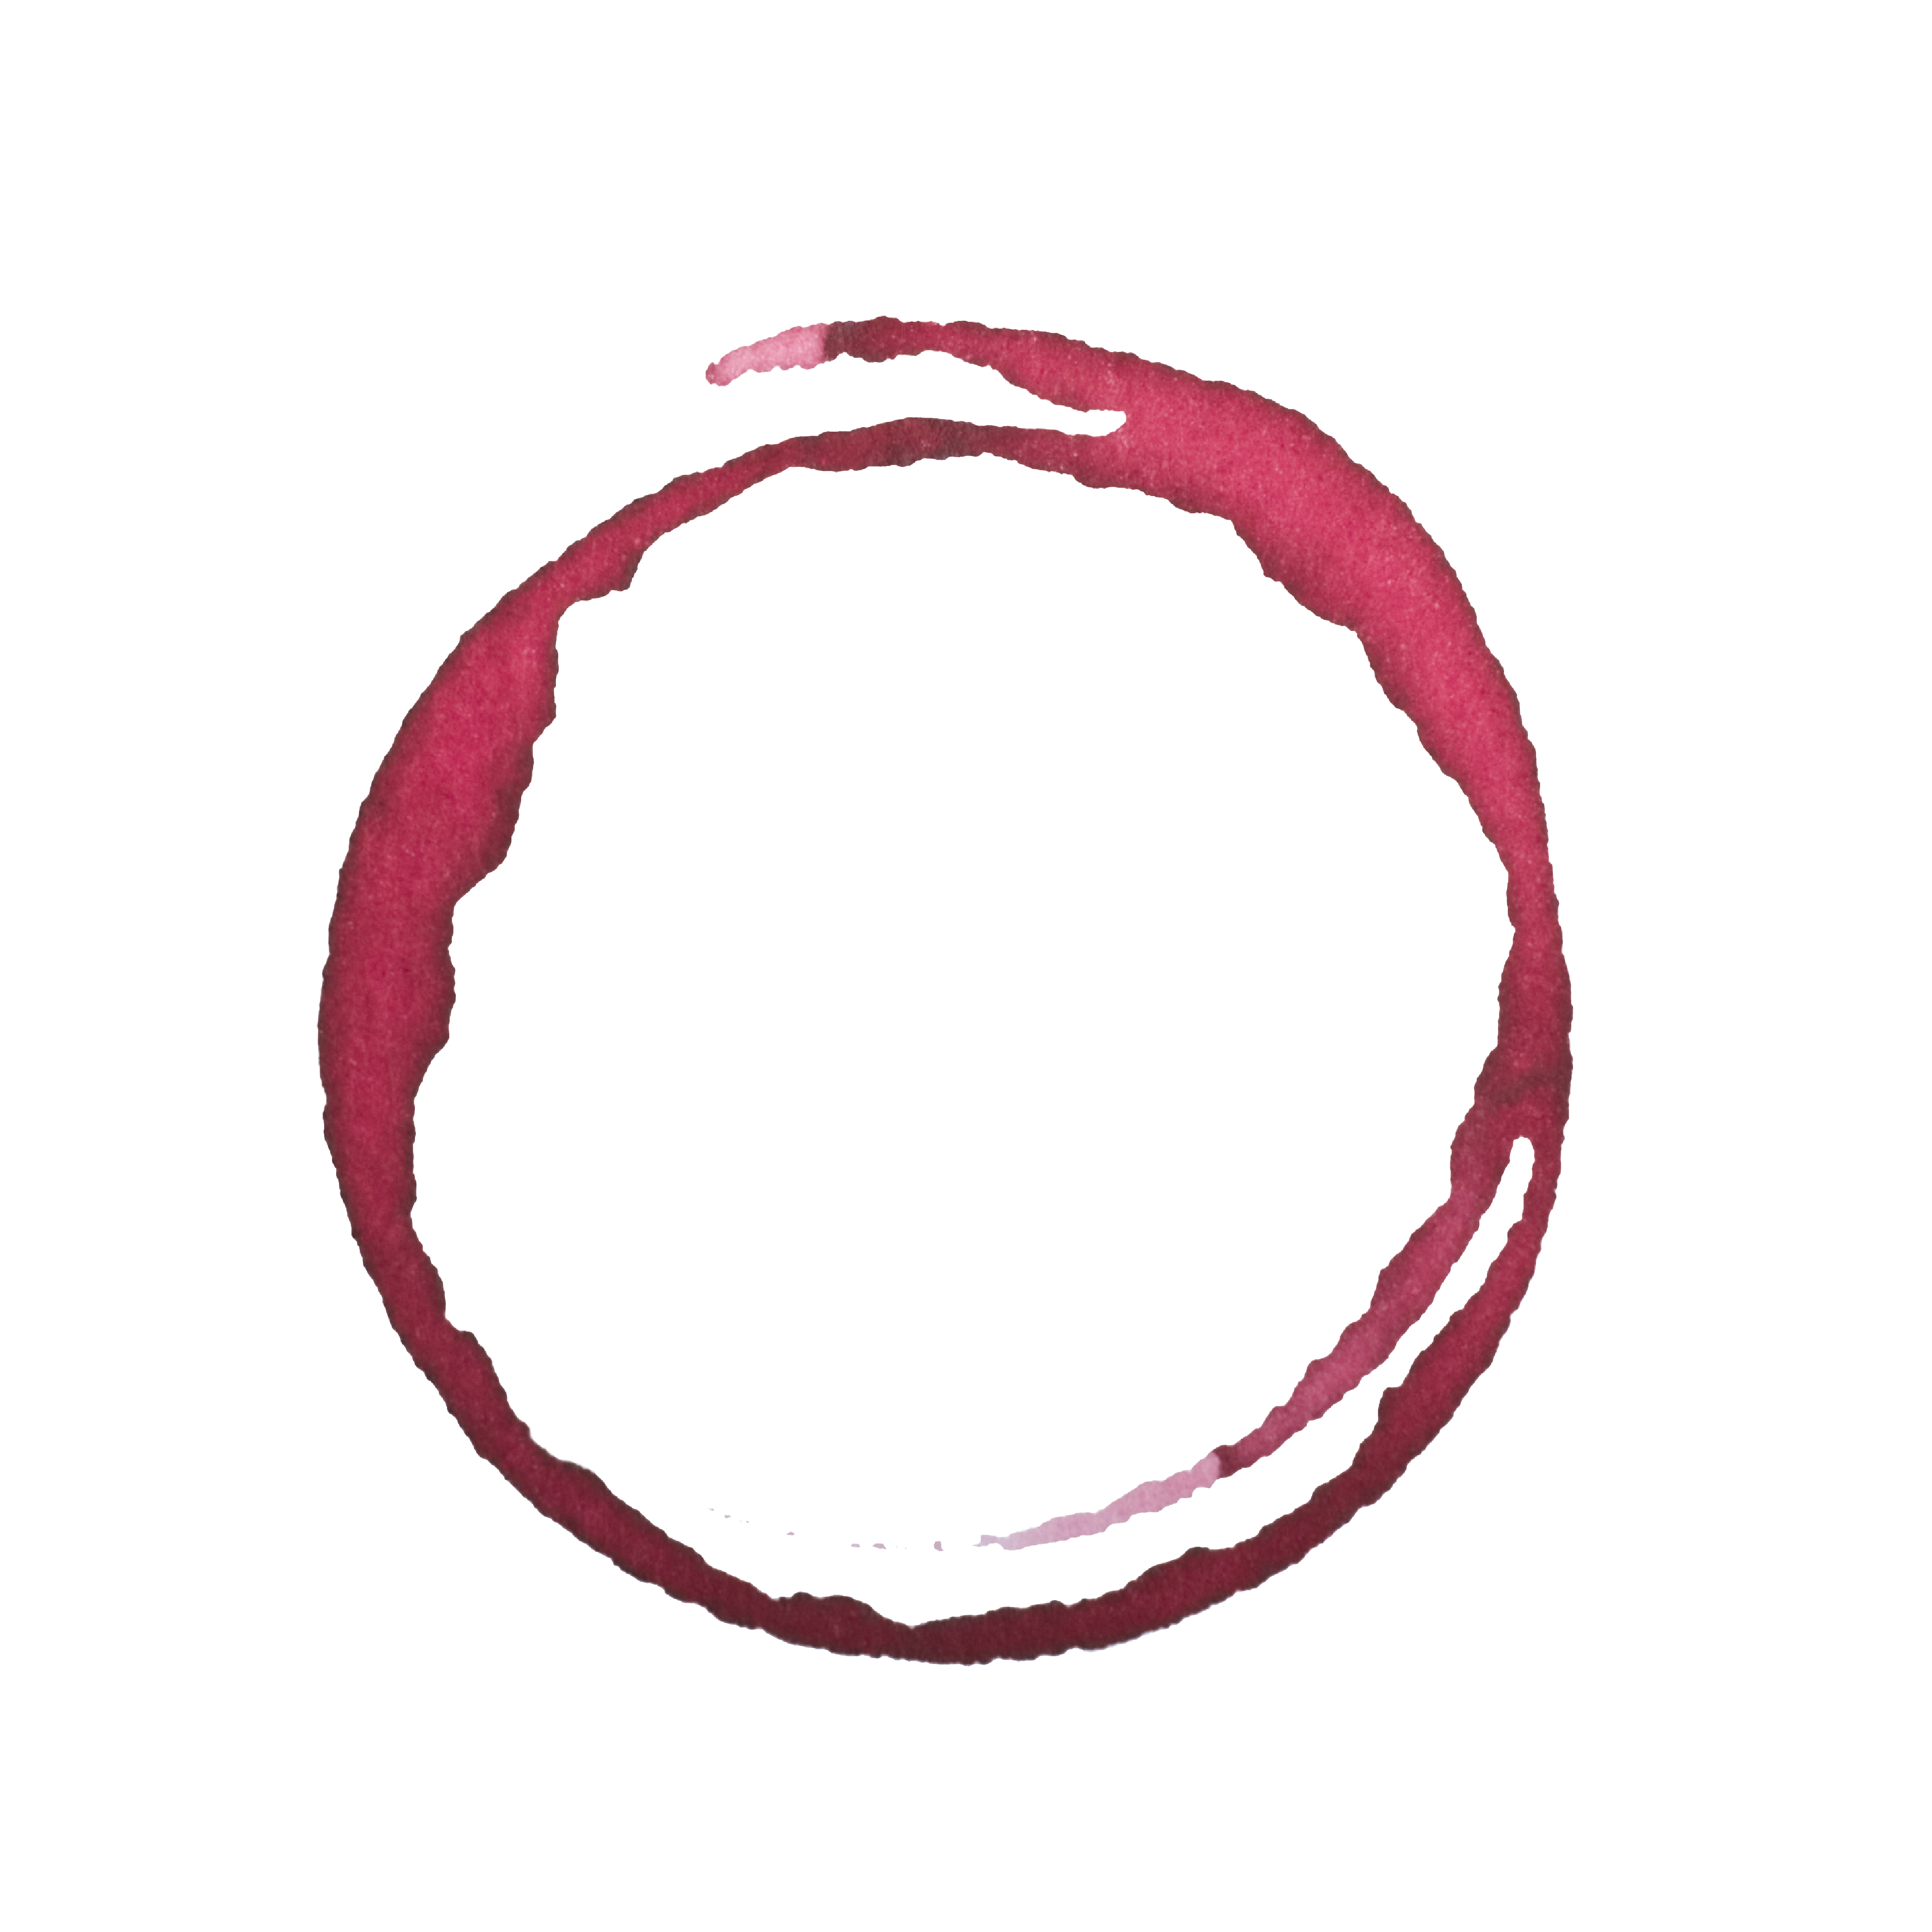 Chiselled Grape Winery